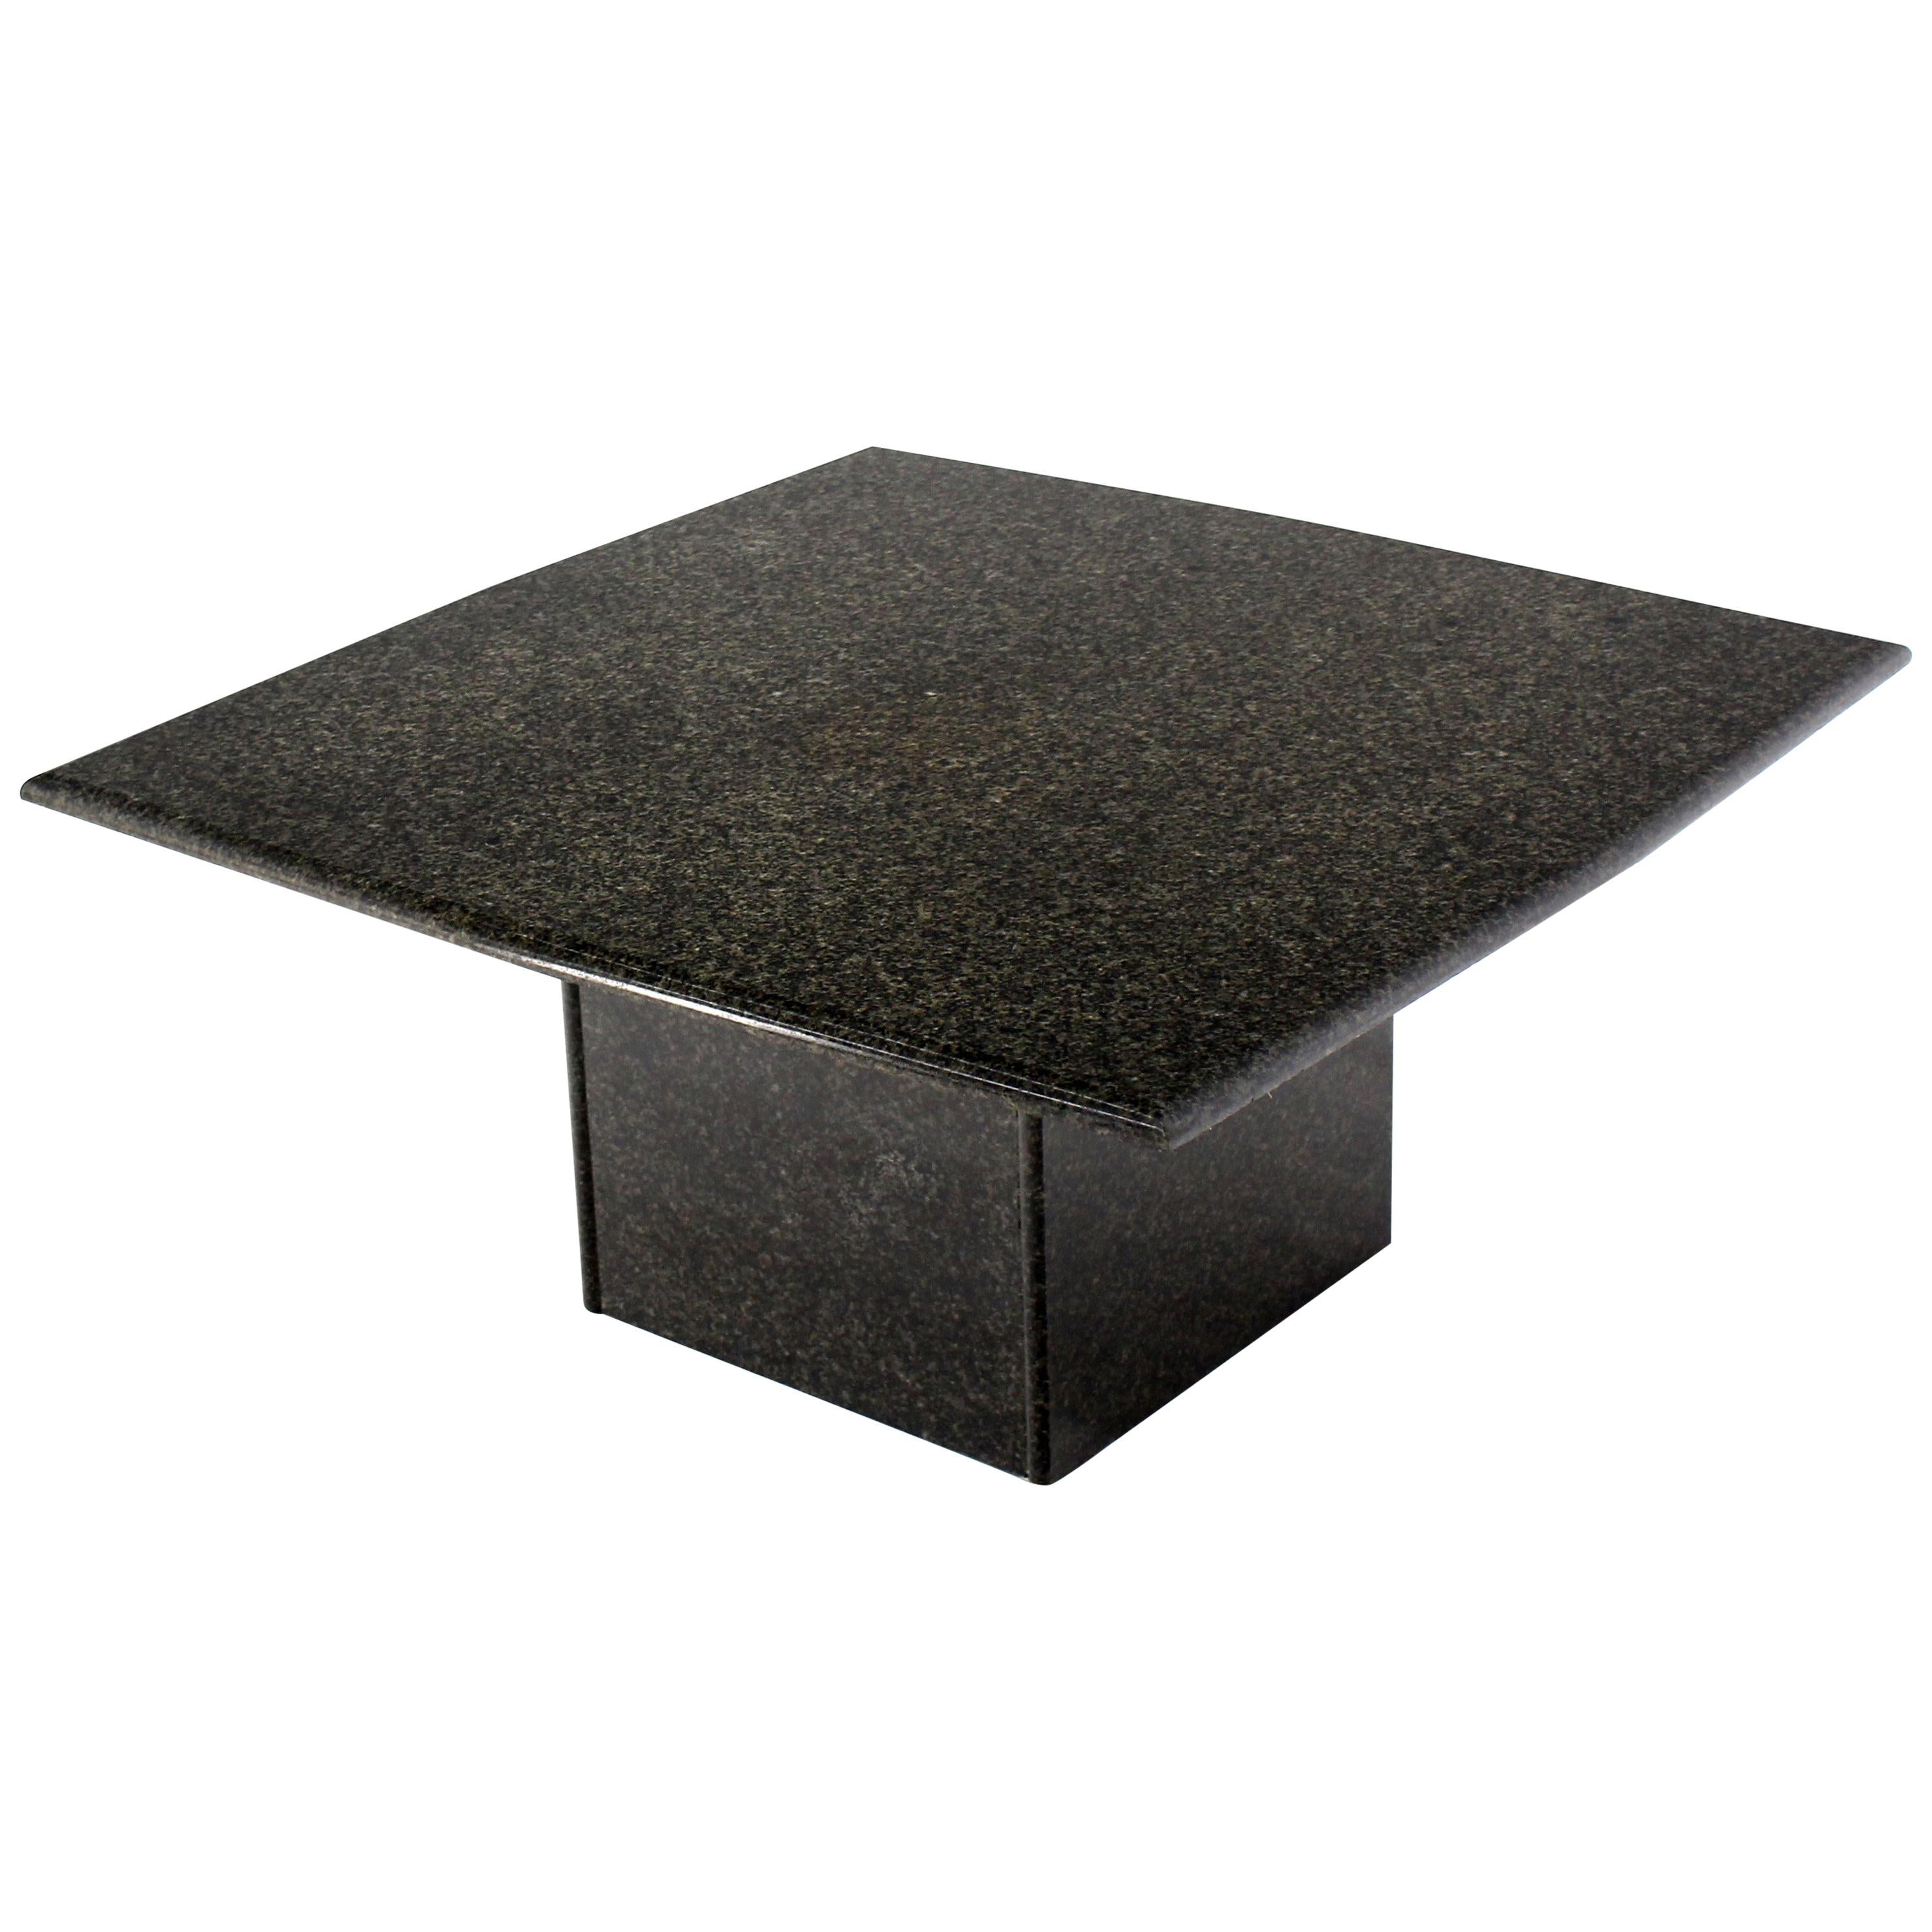 Square Black Granite Pedestal Base Coffee Table